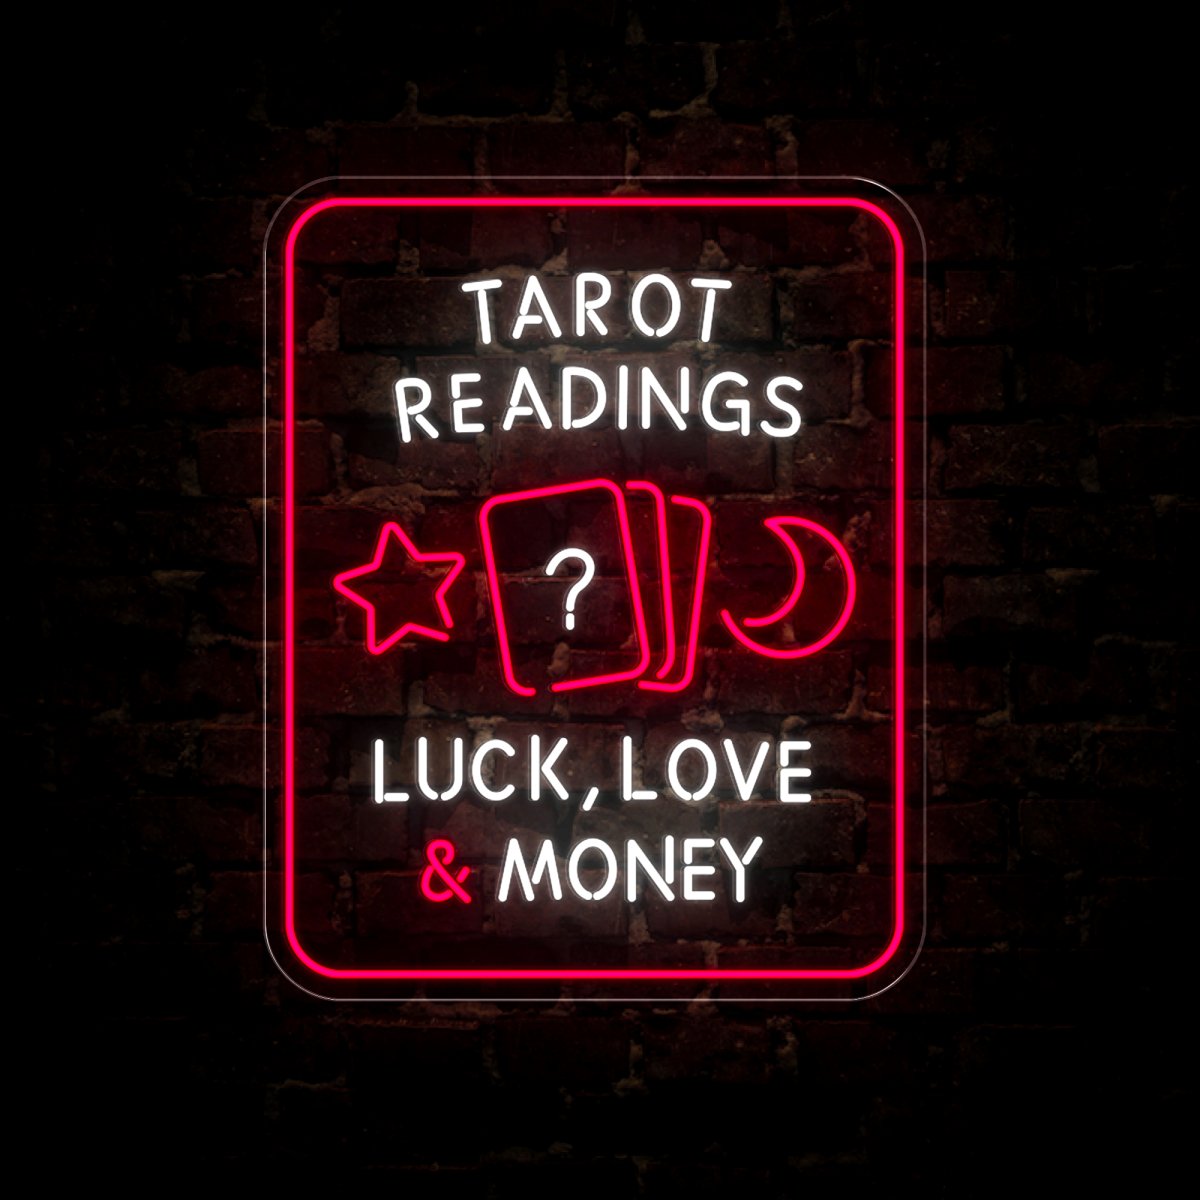 Tarot Readings Shop Led Neon Sign - Reels Custom